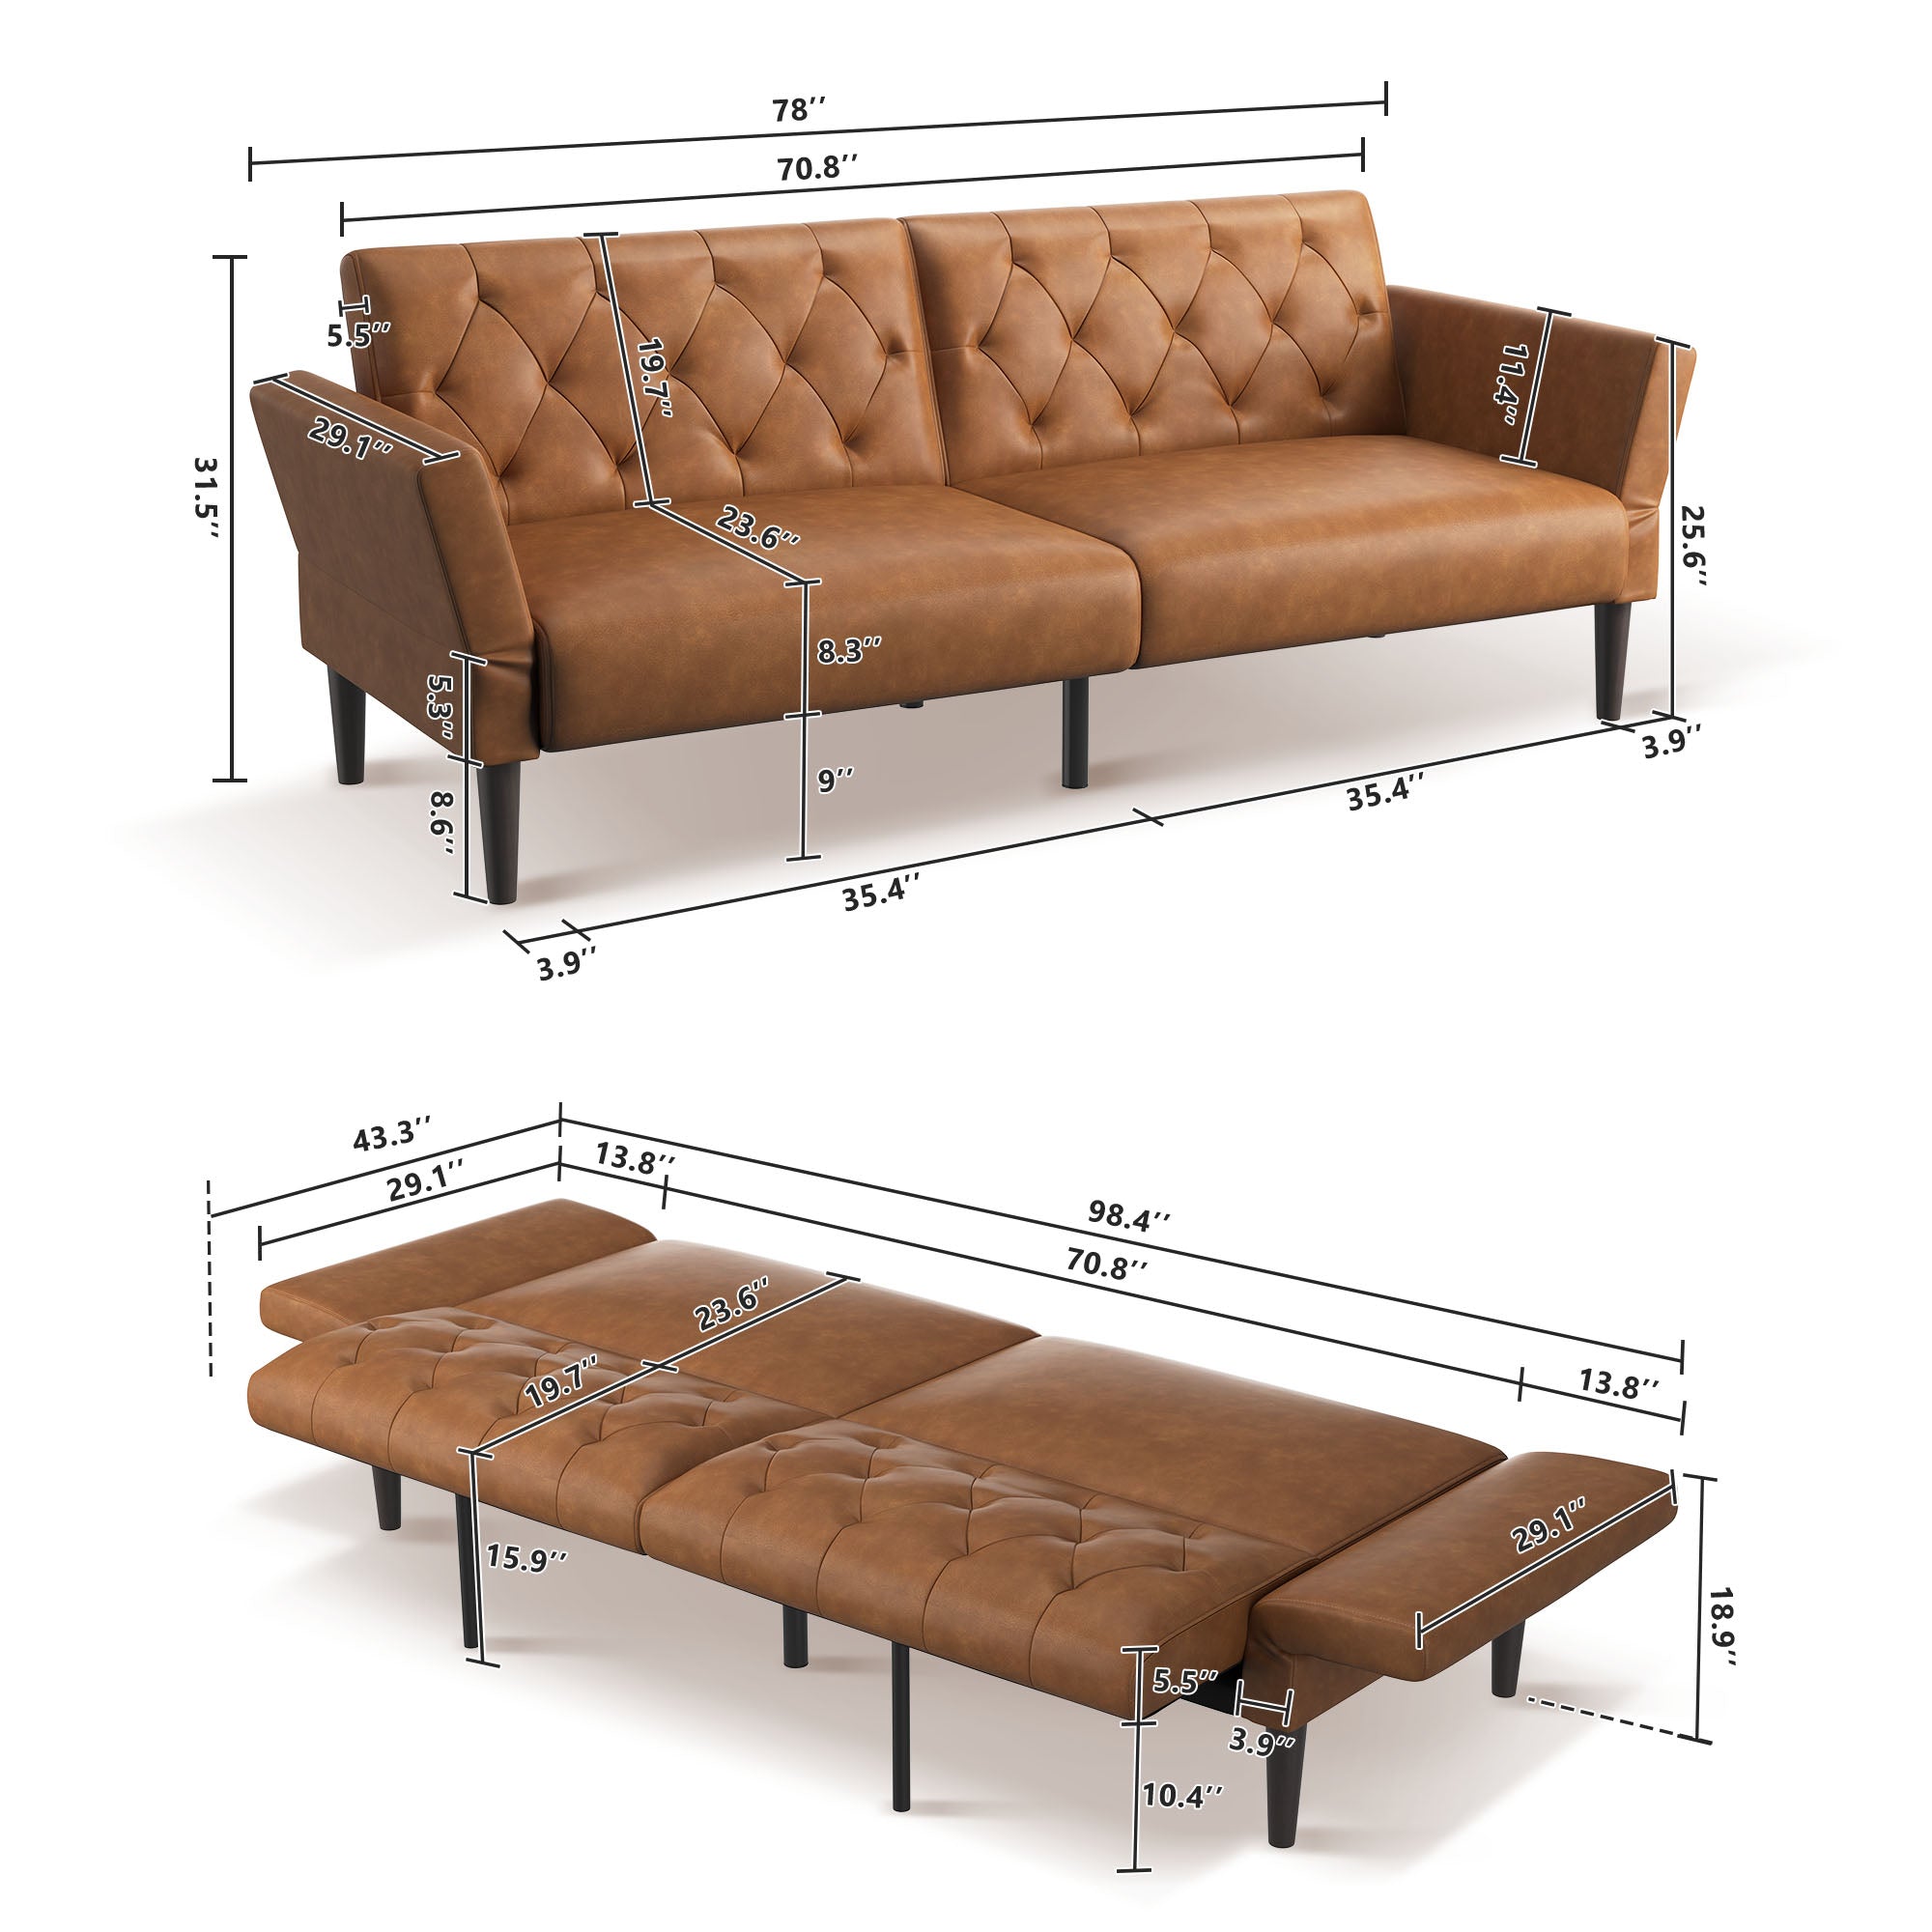 HONBAY 78" Wide PU Leather Futon Sleeper Sofa Bed